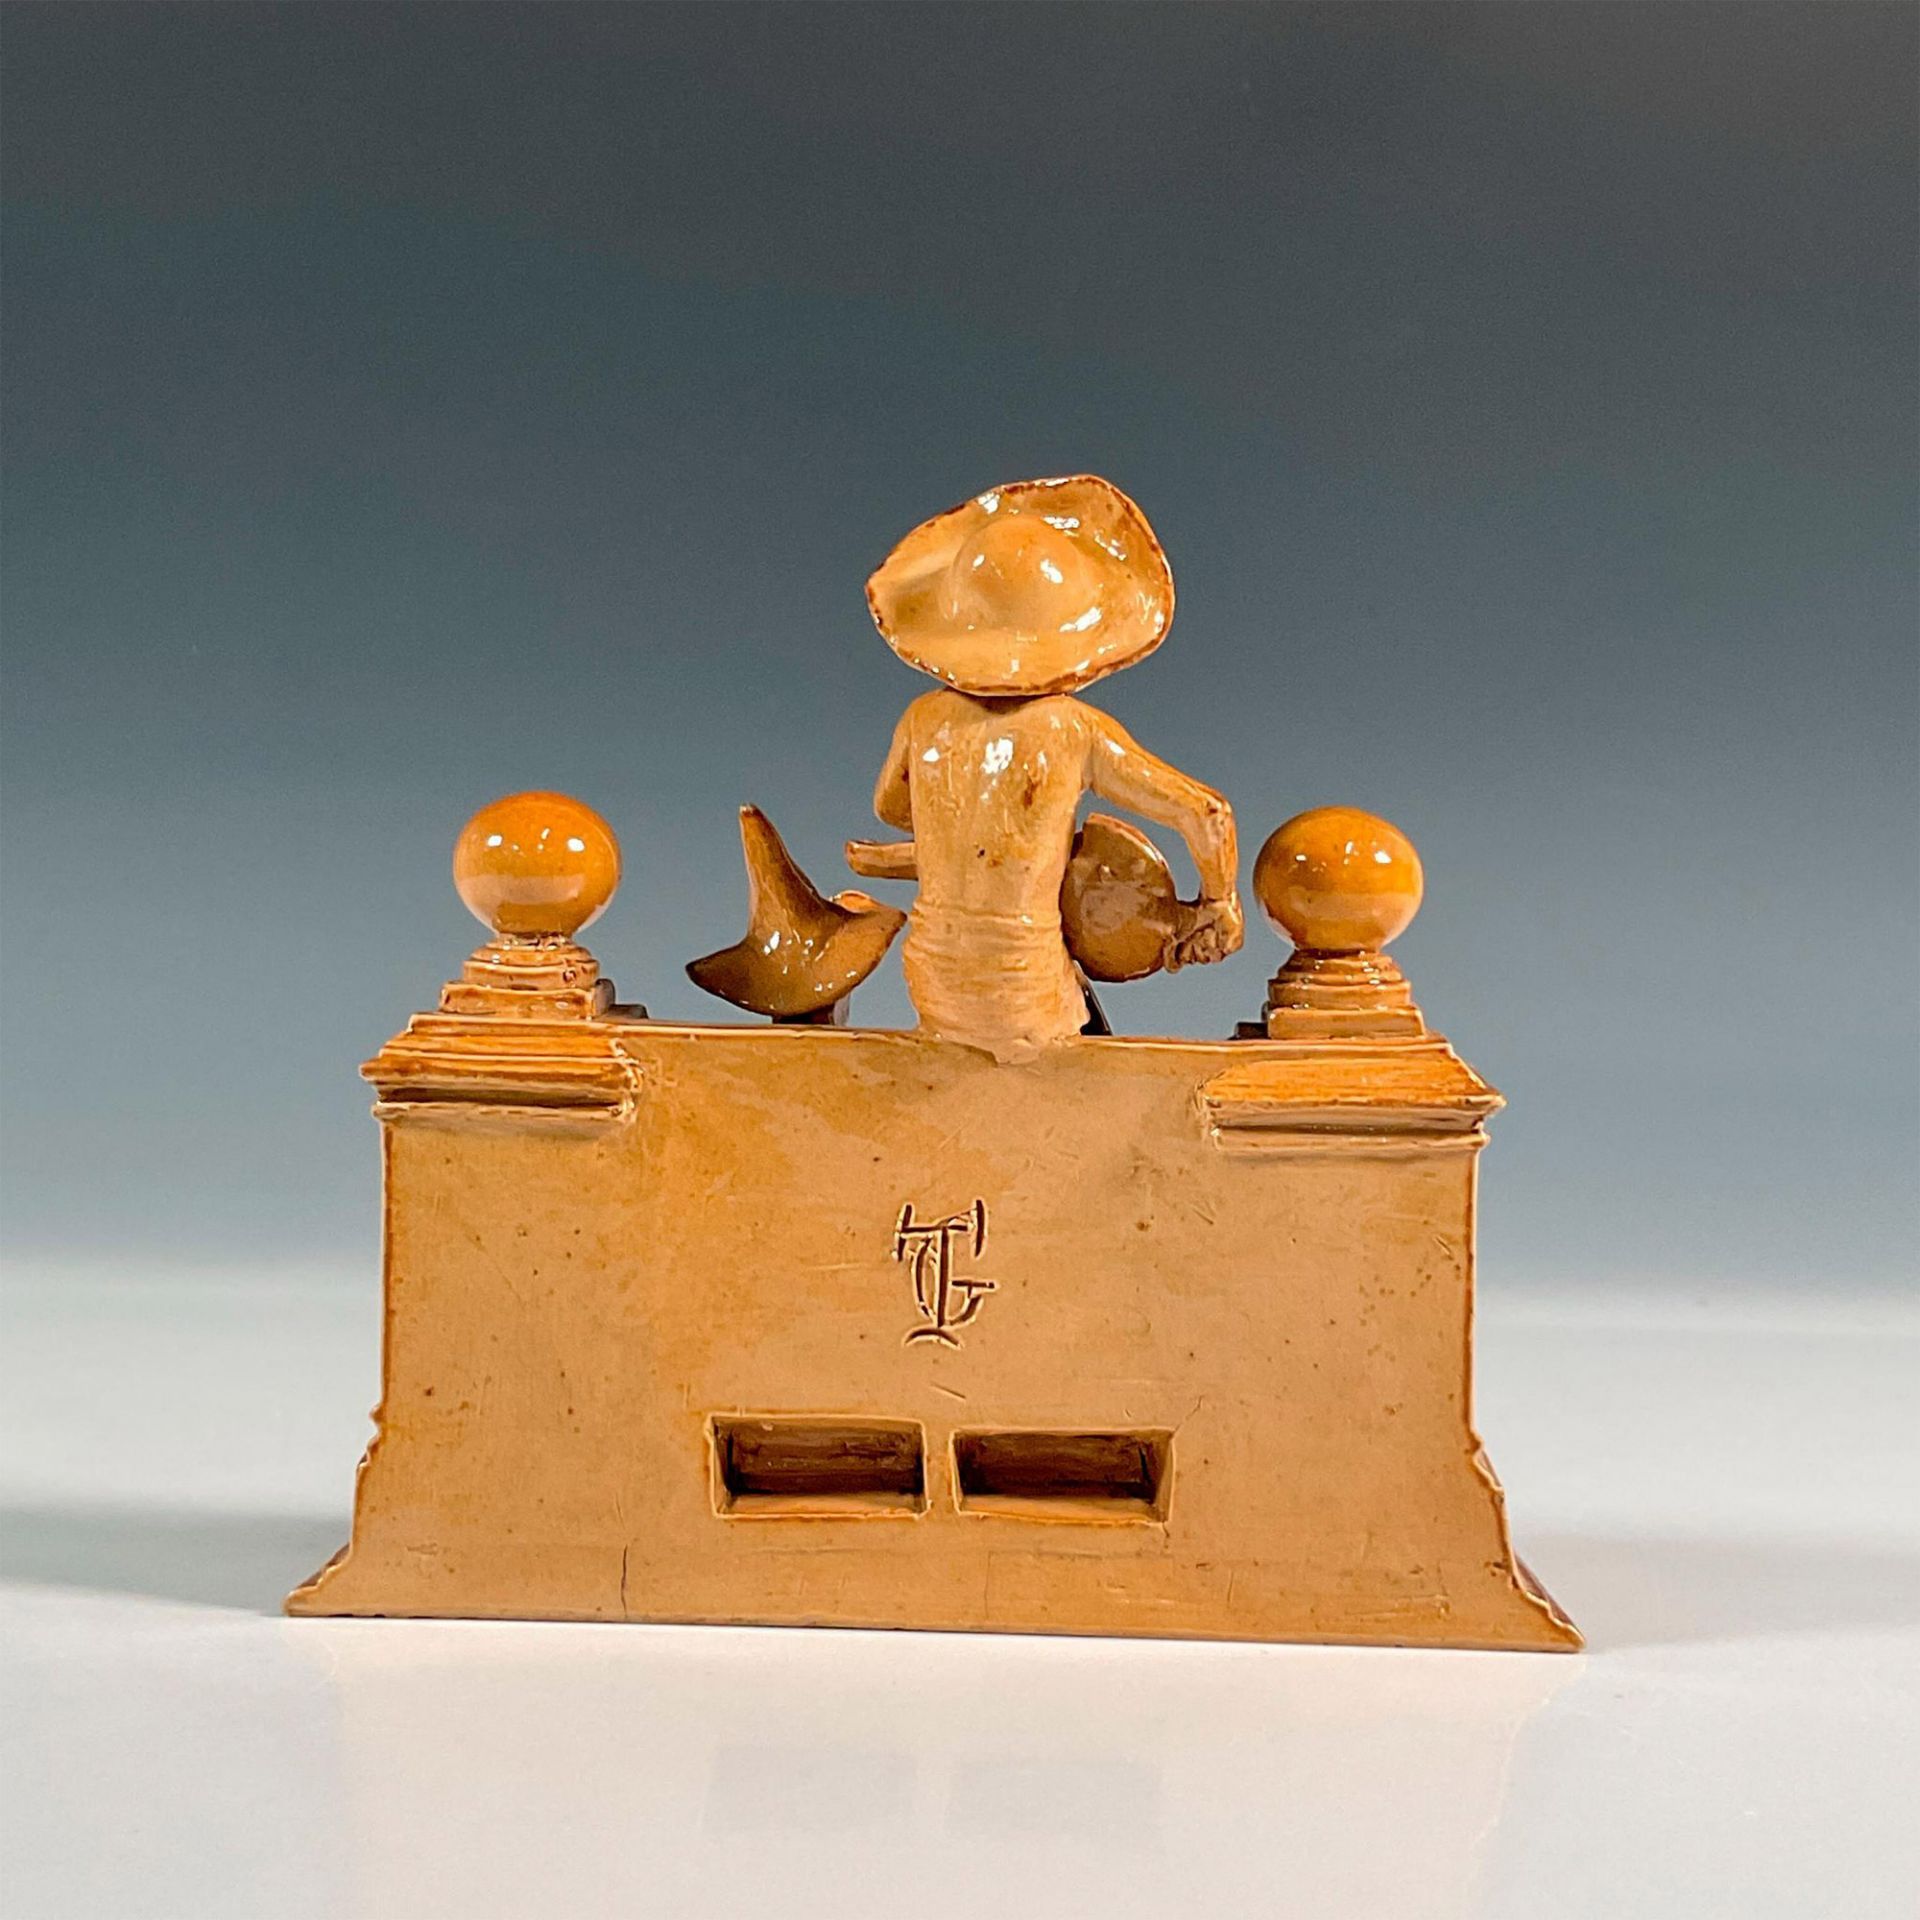 Doulton Lambeth George Tinworth Merry Musician Figurine - Image 2 of 3